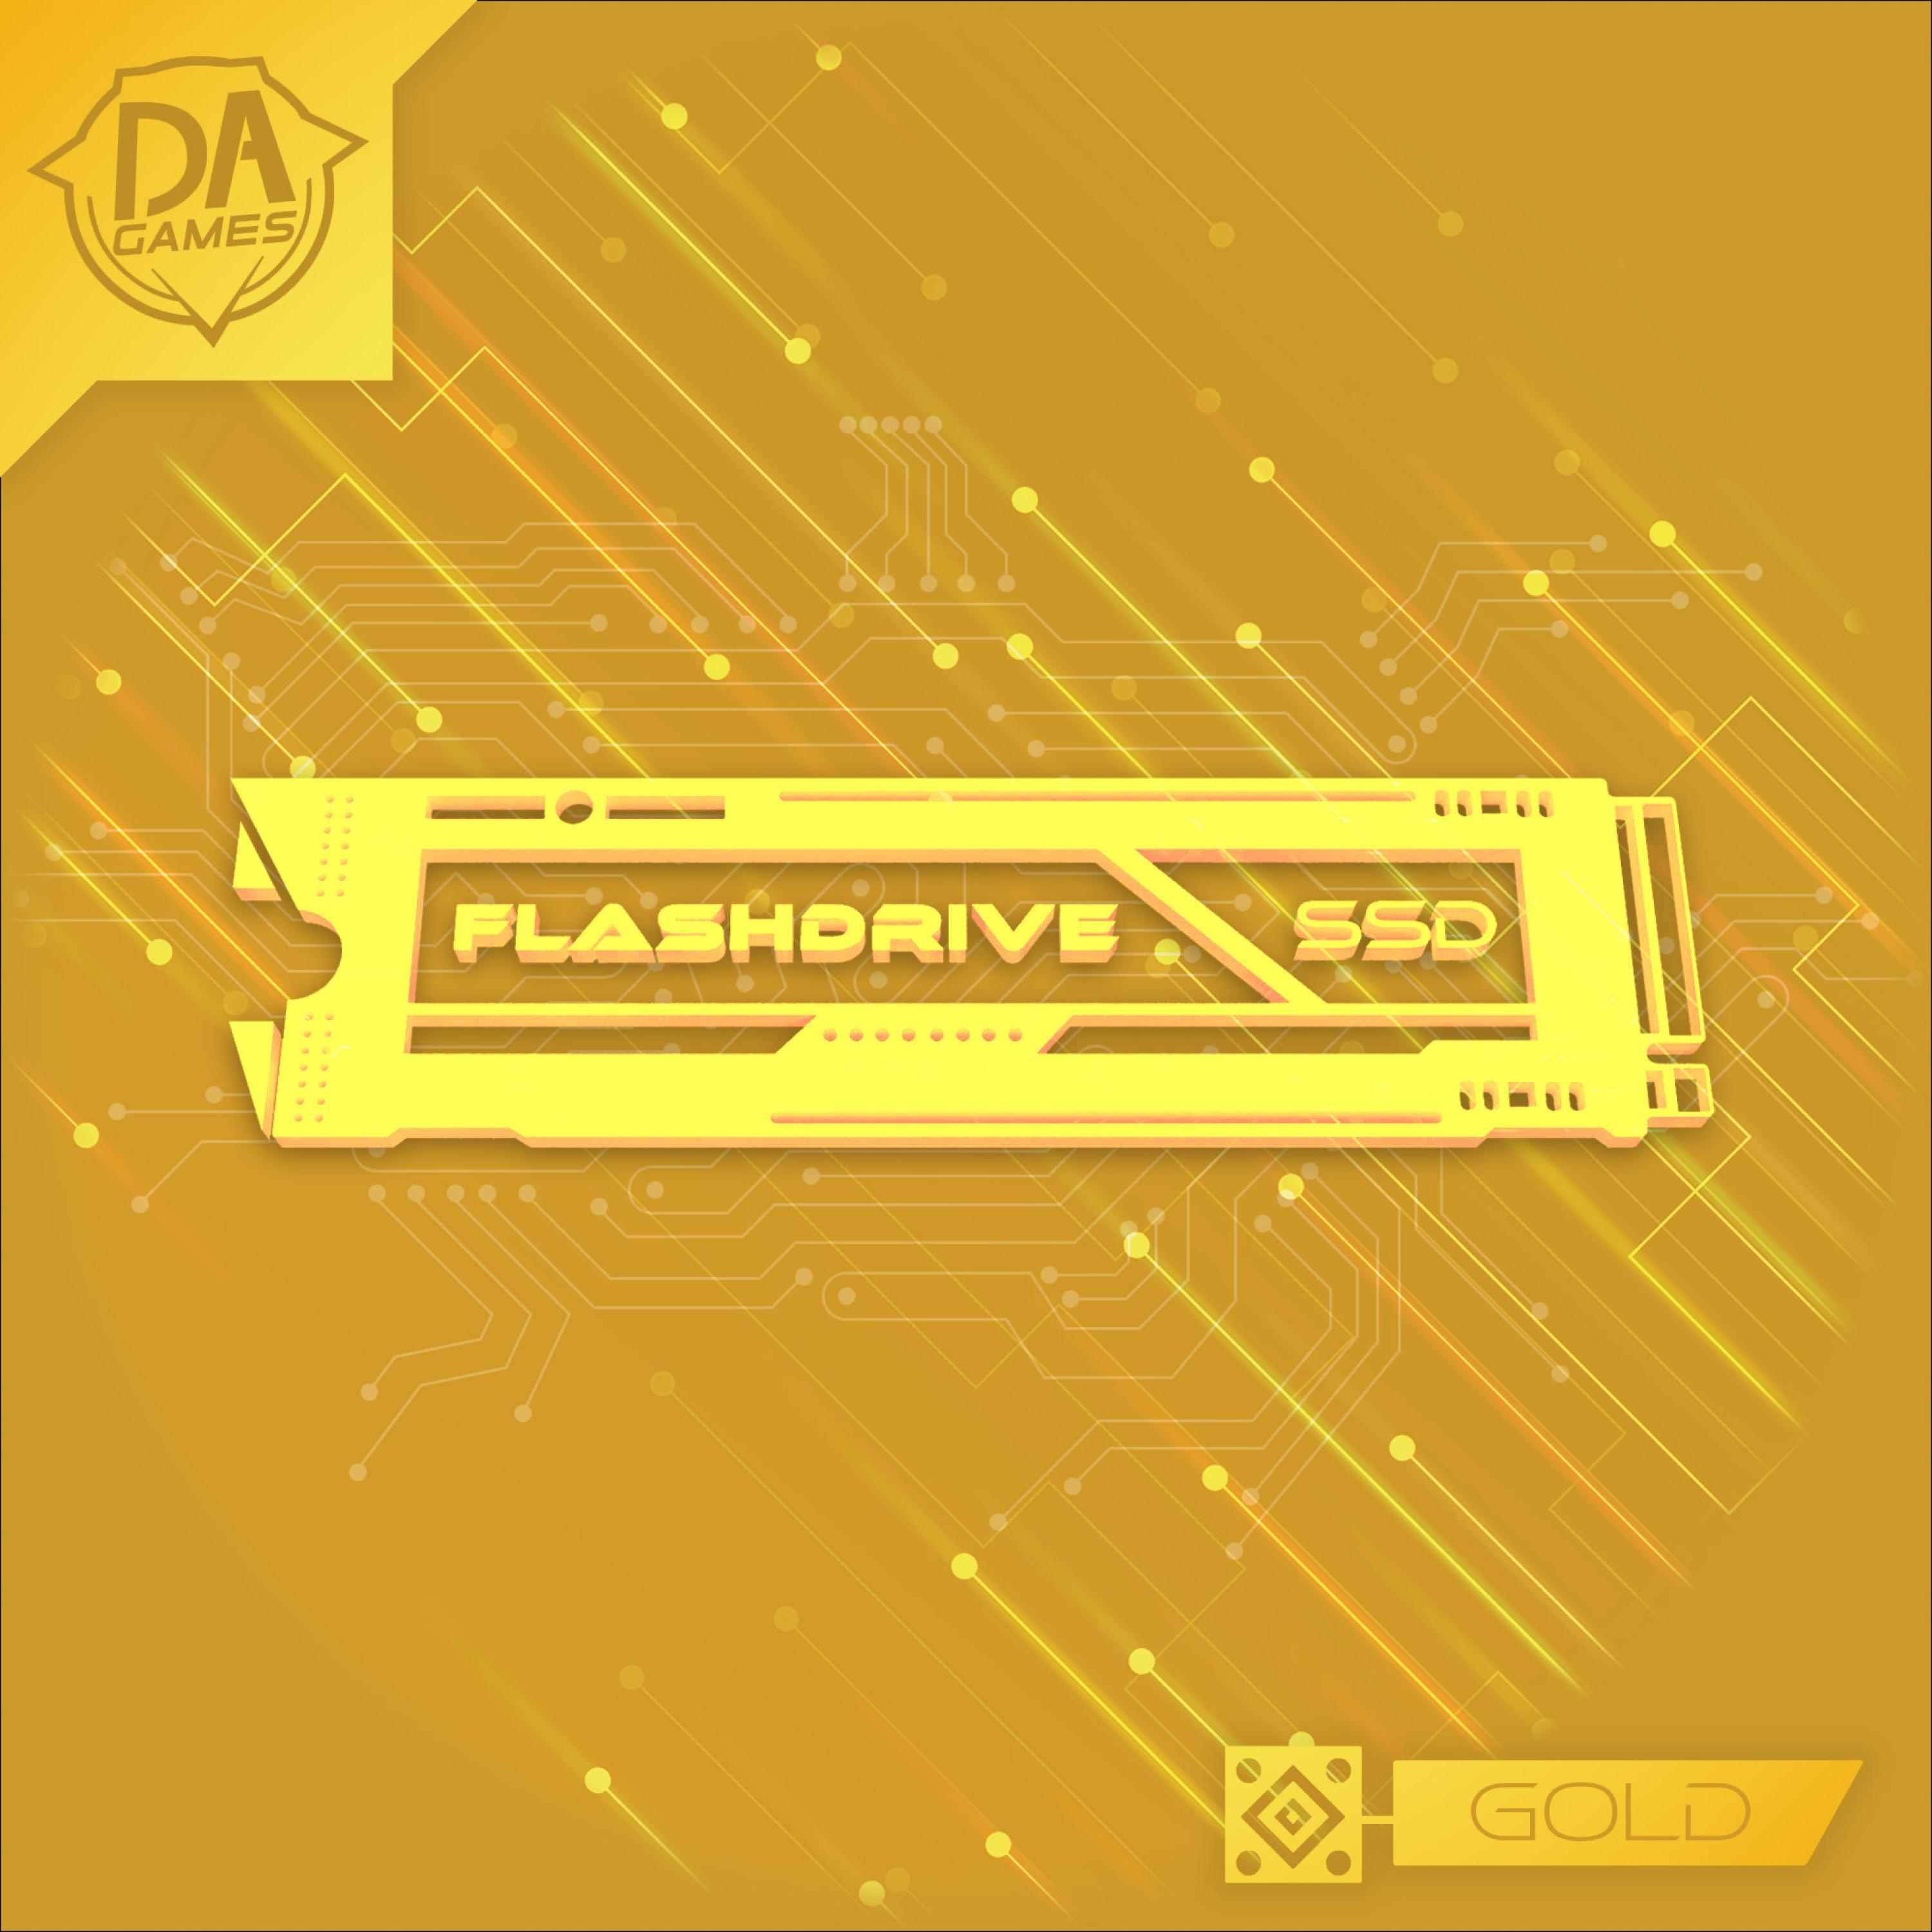 Dagames - Gold: SSD